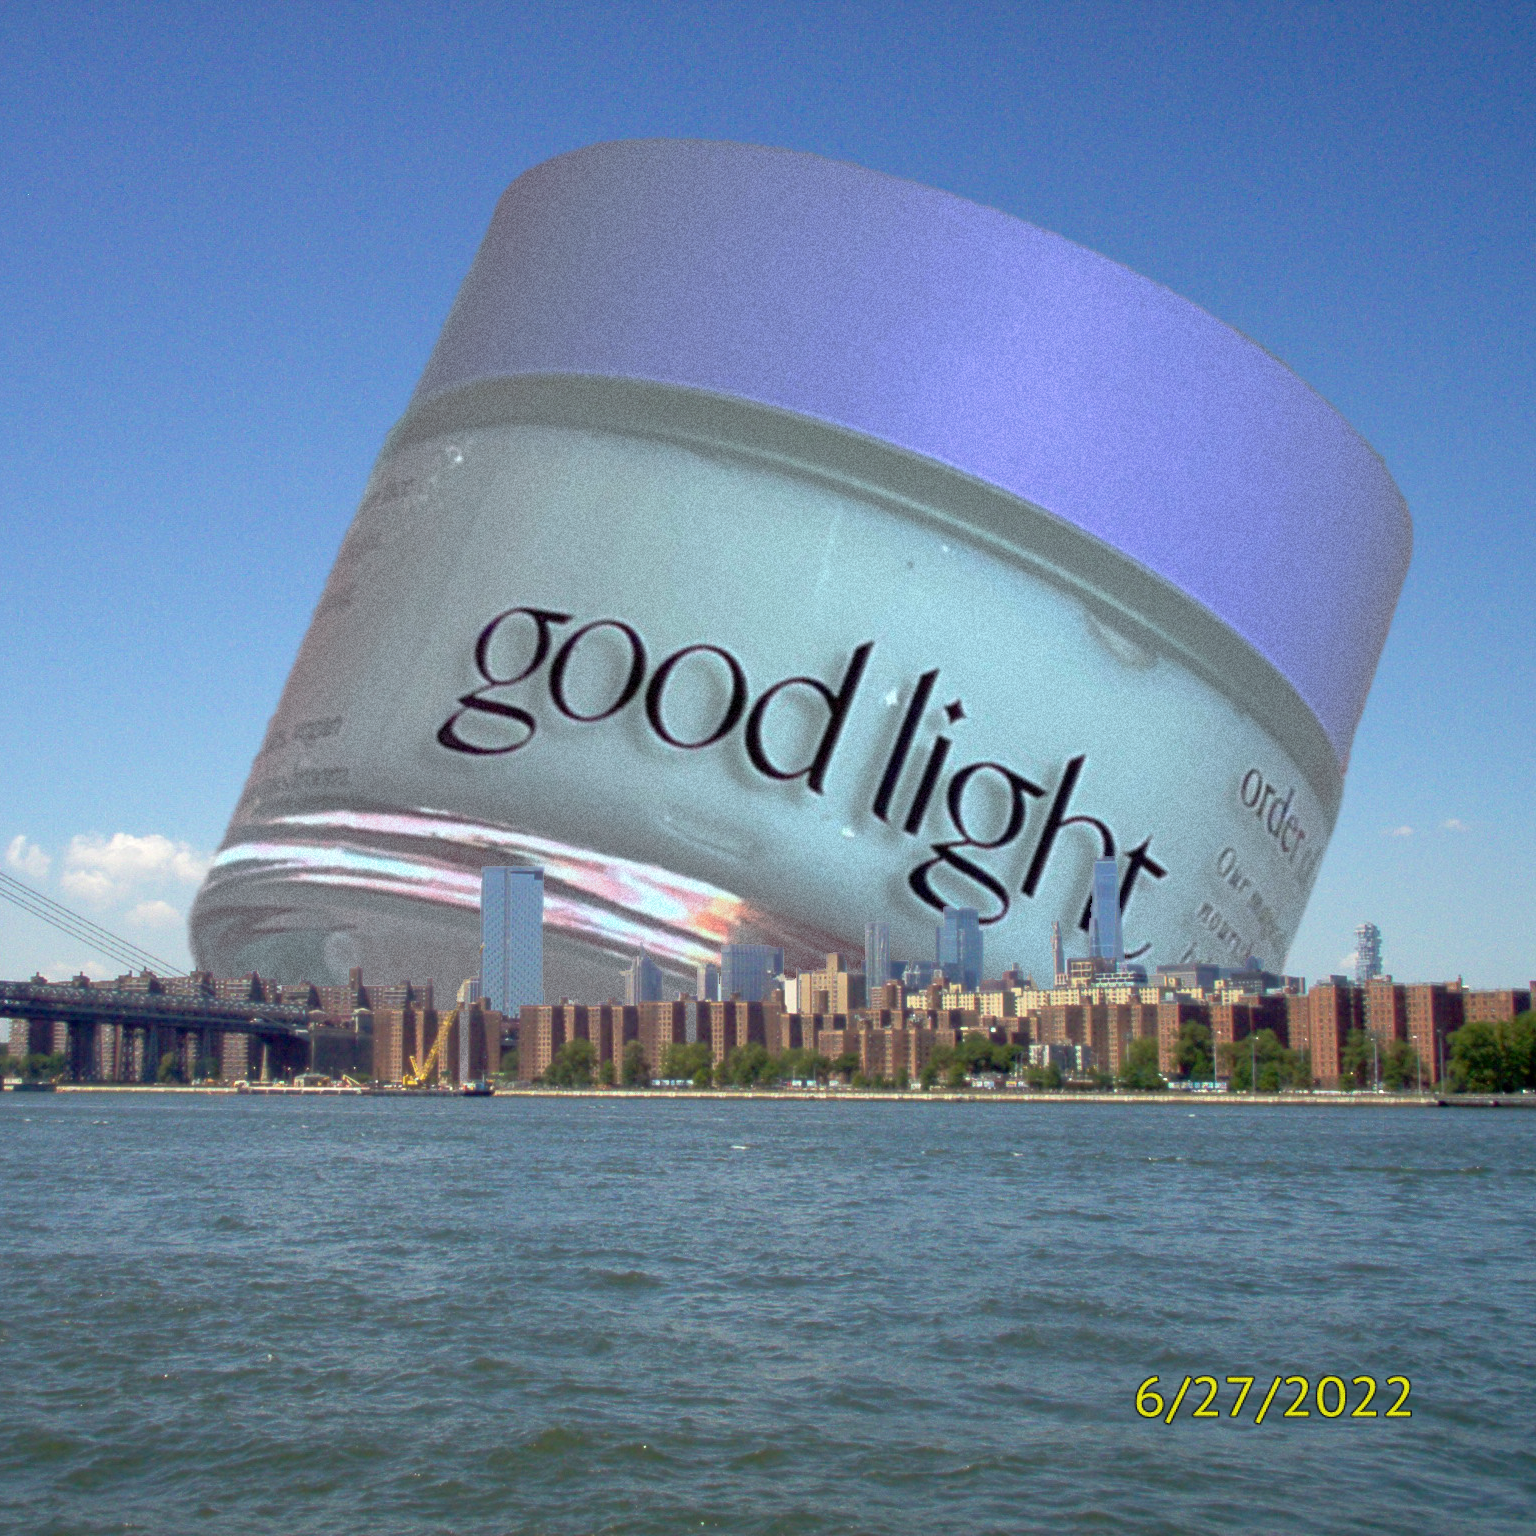 It's here: good light's first moisturizer